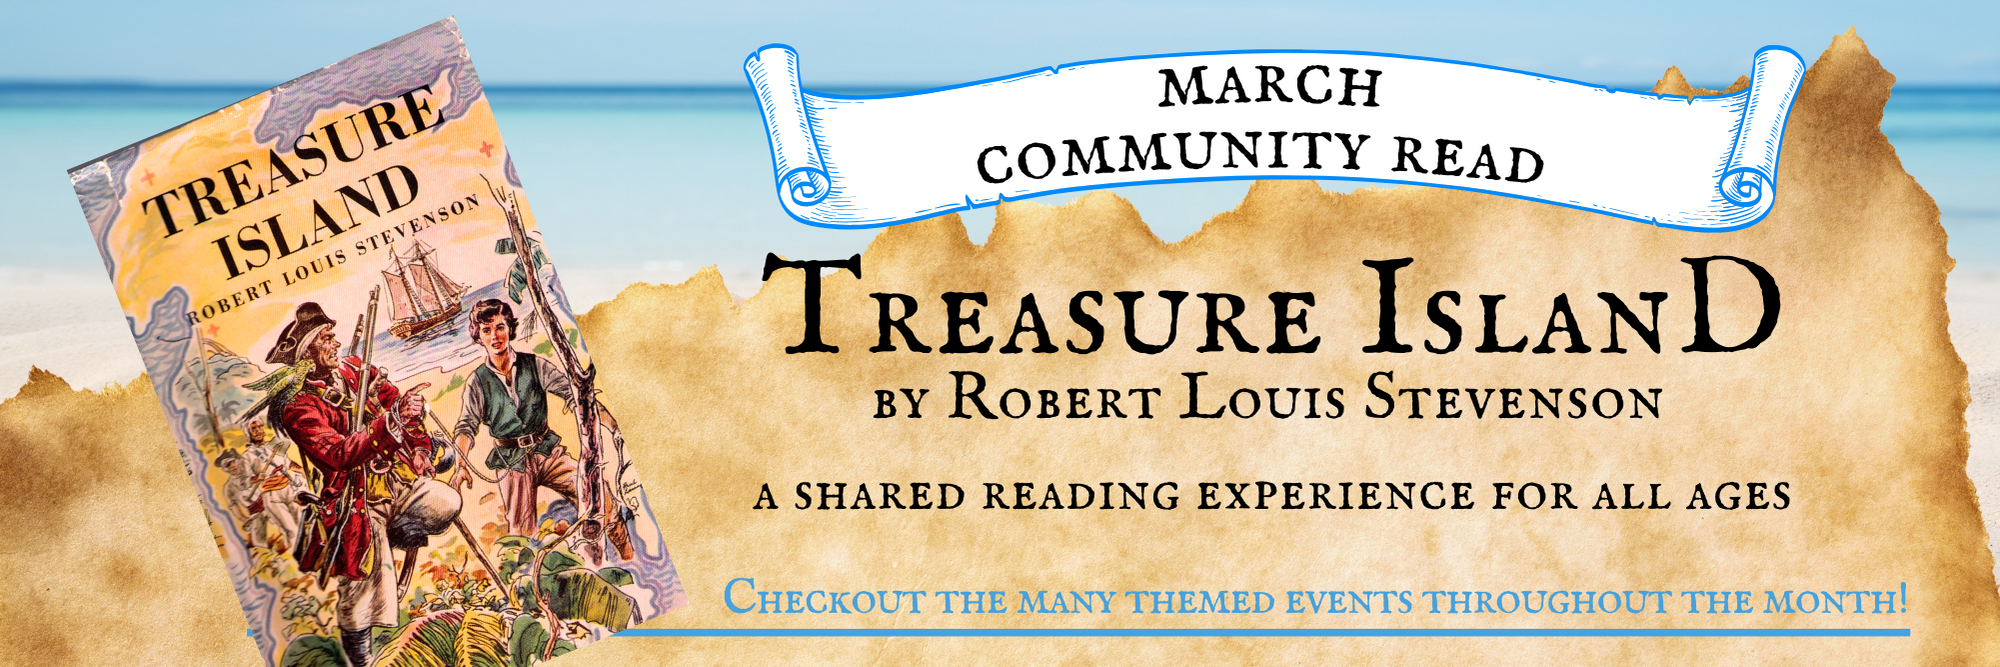 Treasure Island Community Read Banner